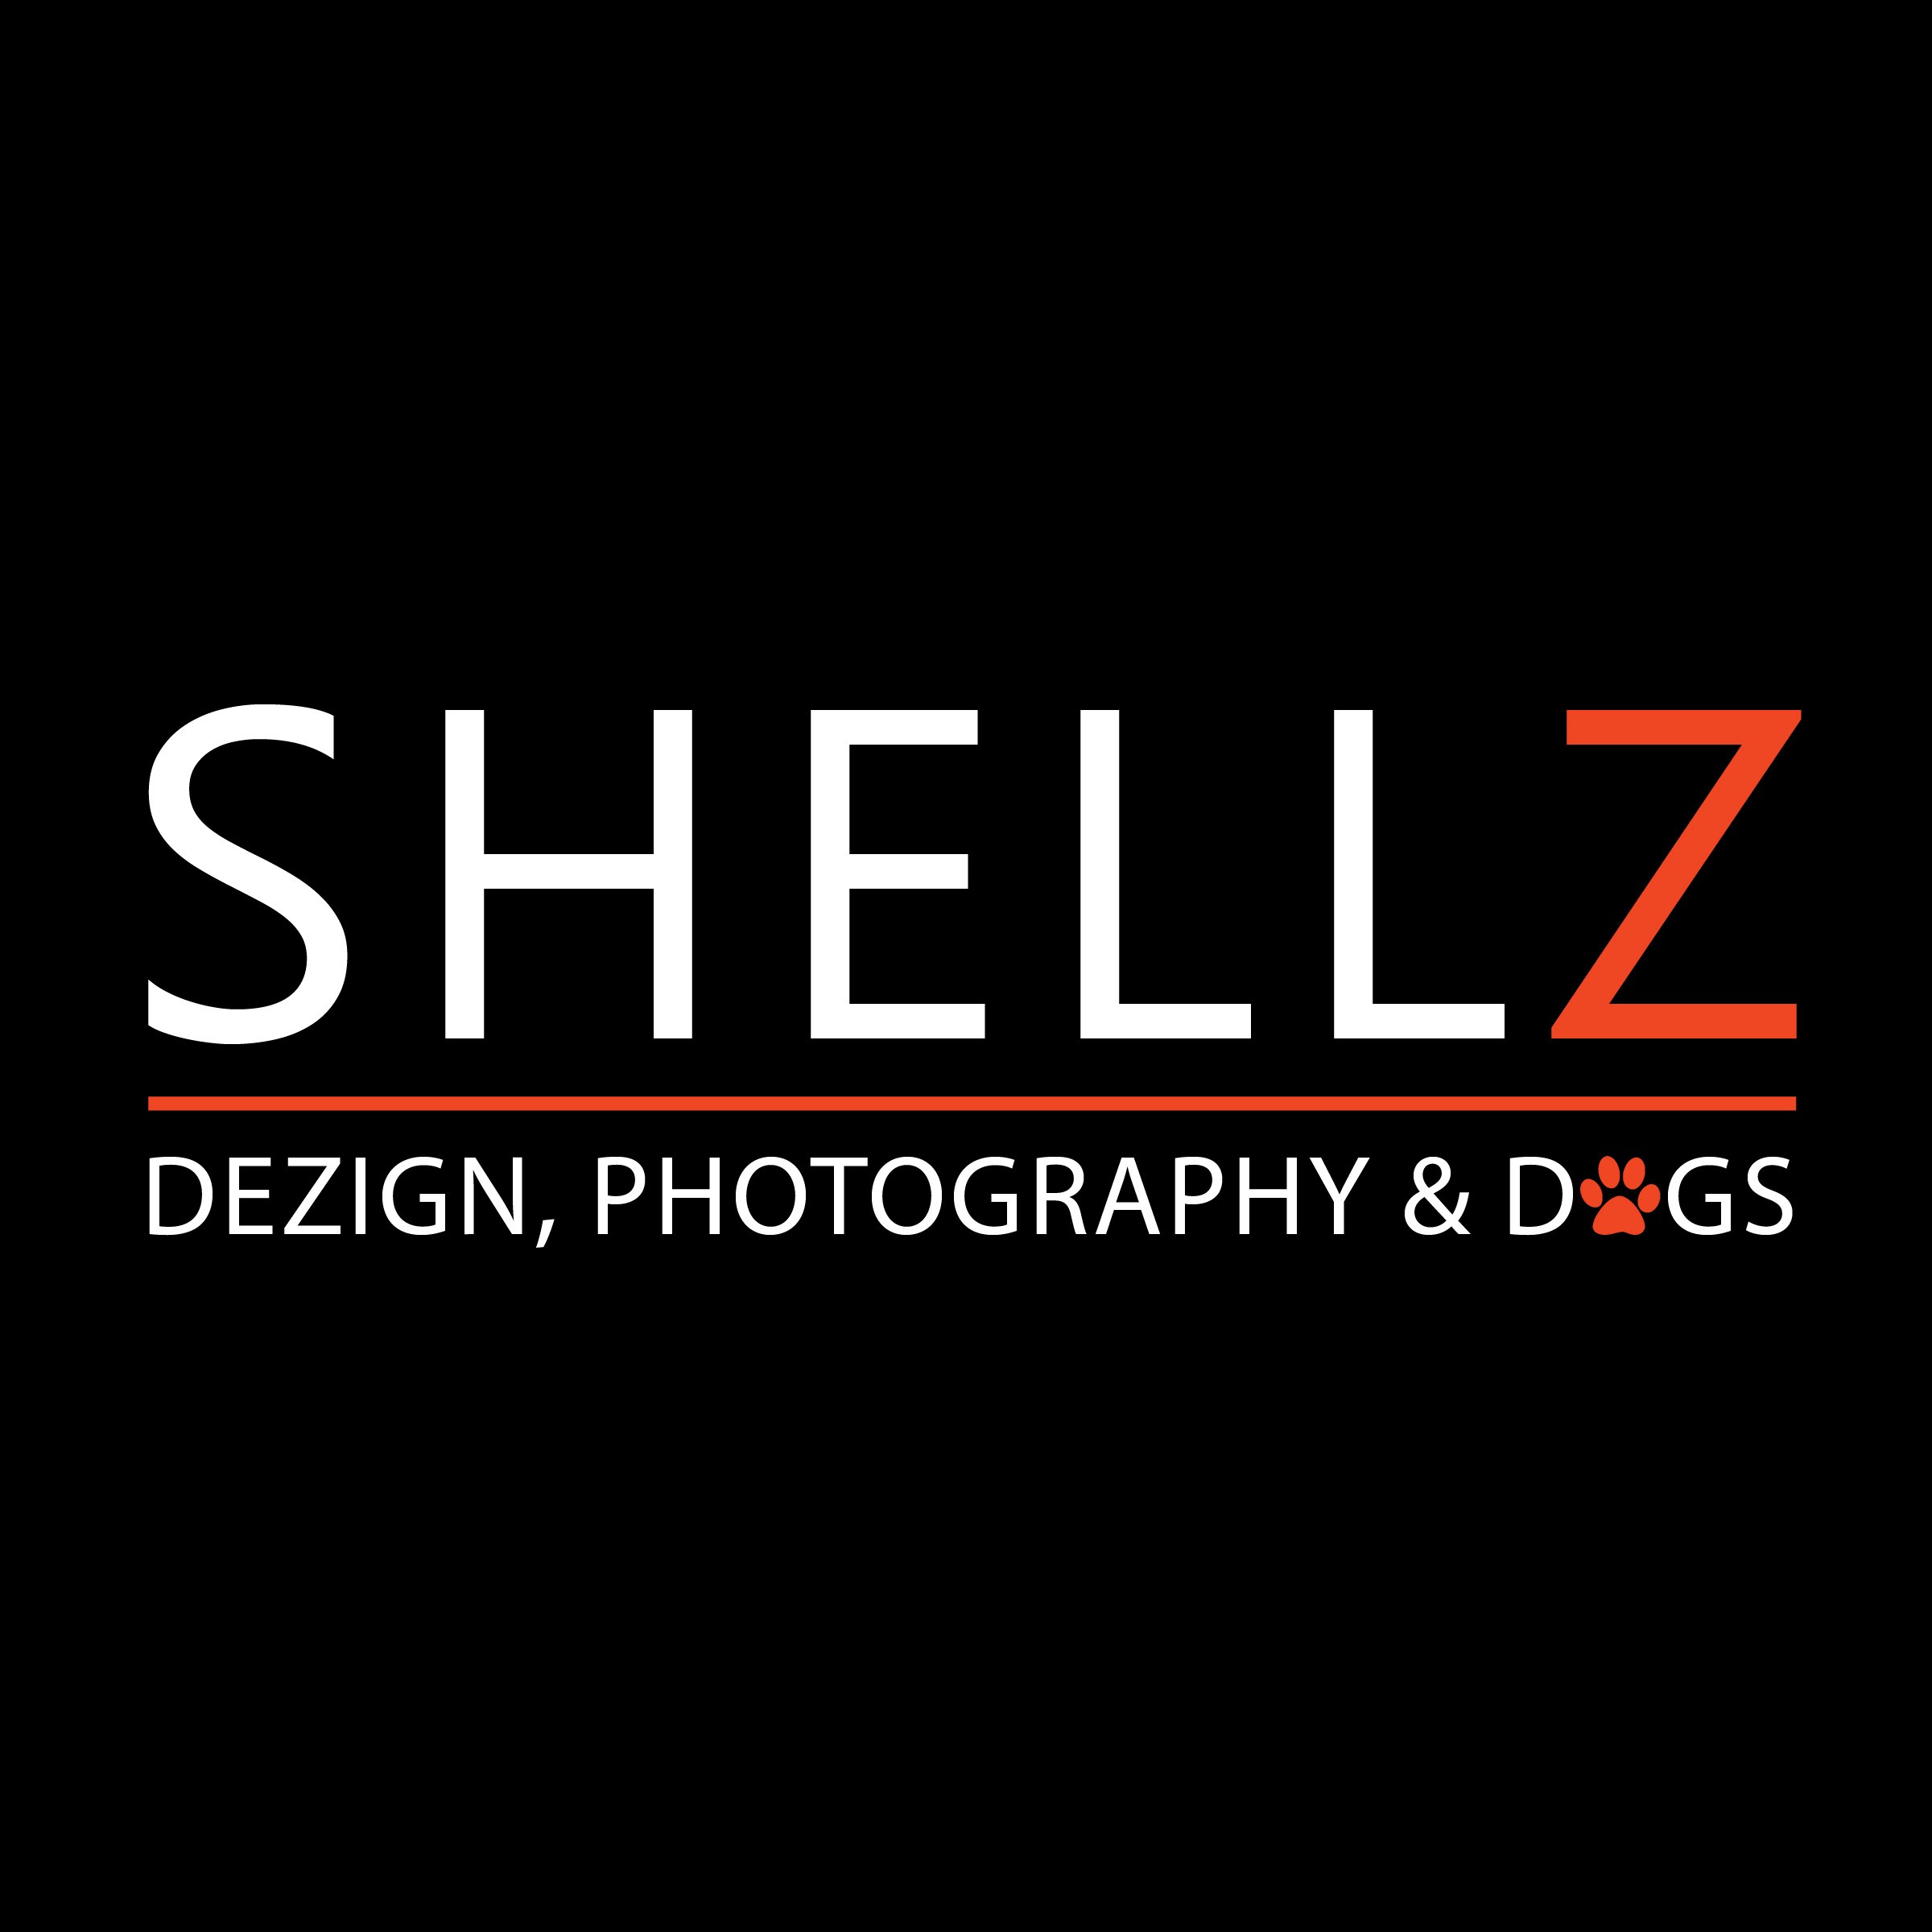 Shellz Dezign, Photography & Dogs Logo